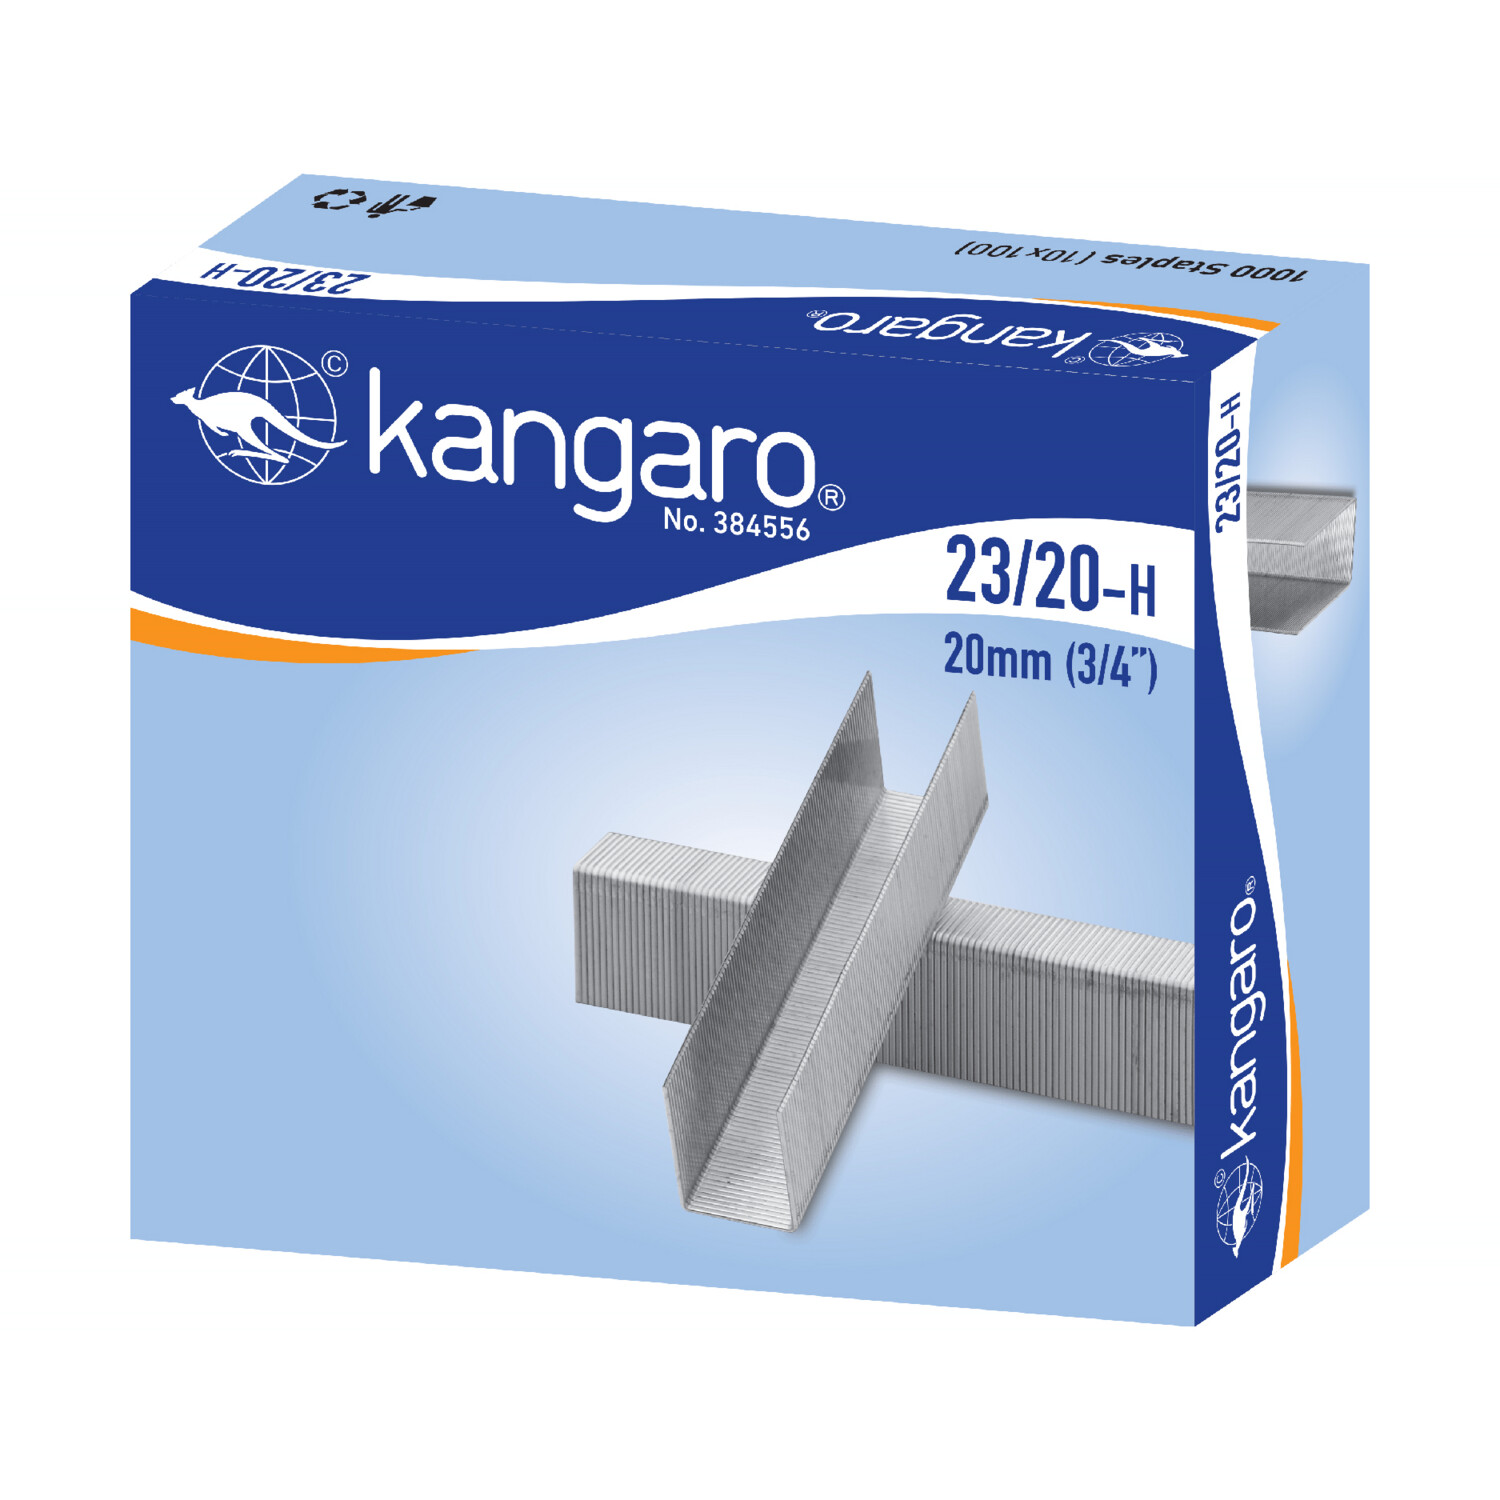 KANGARO 1000 STAPLES 23/20-H